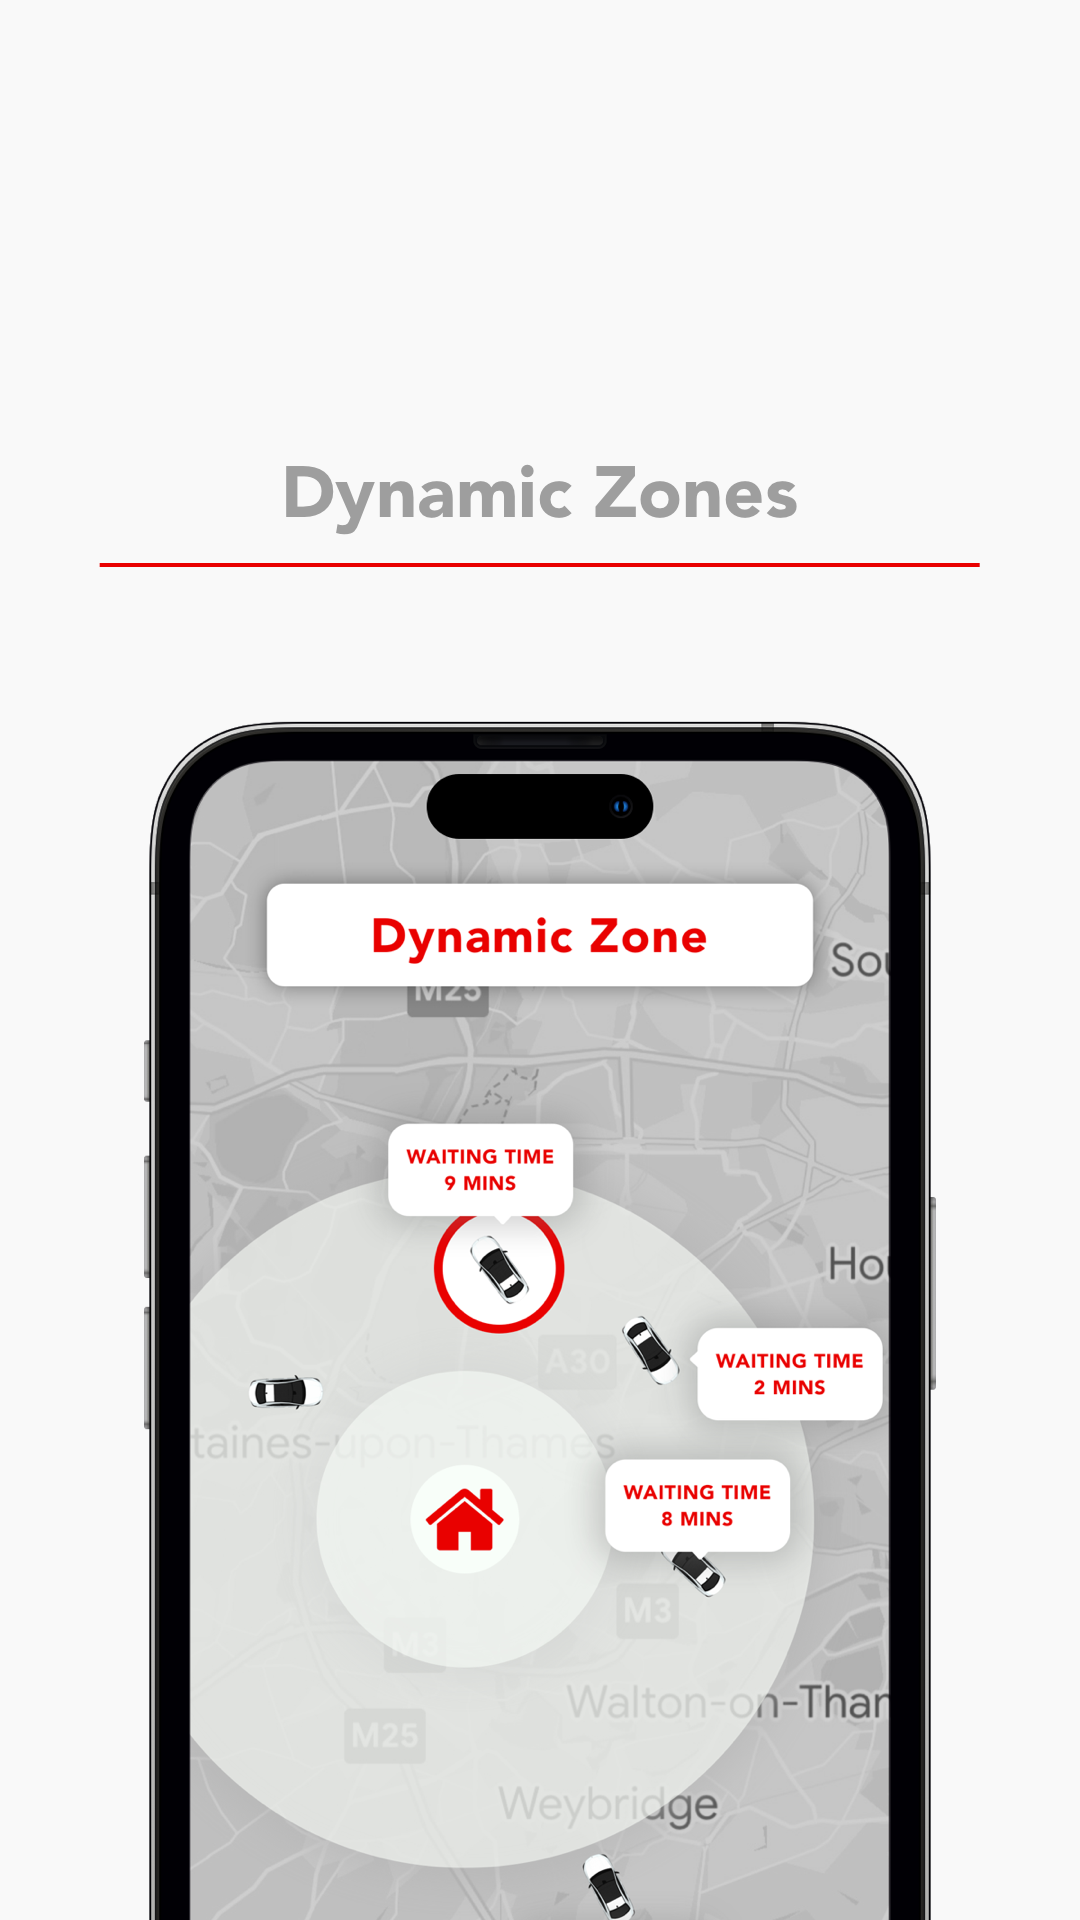 Dynamic zones thumbnail image